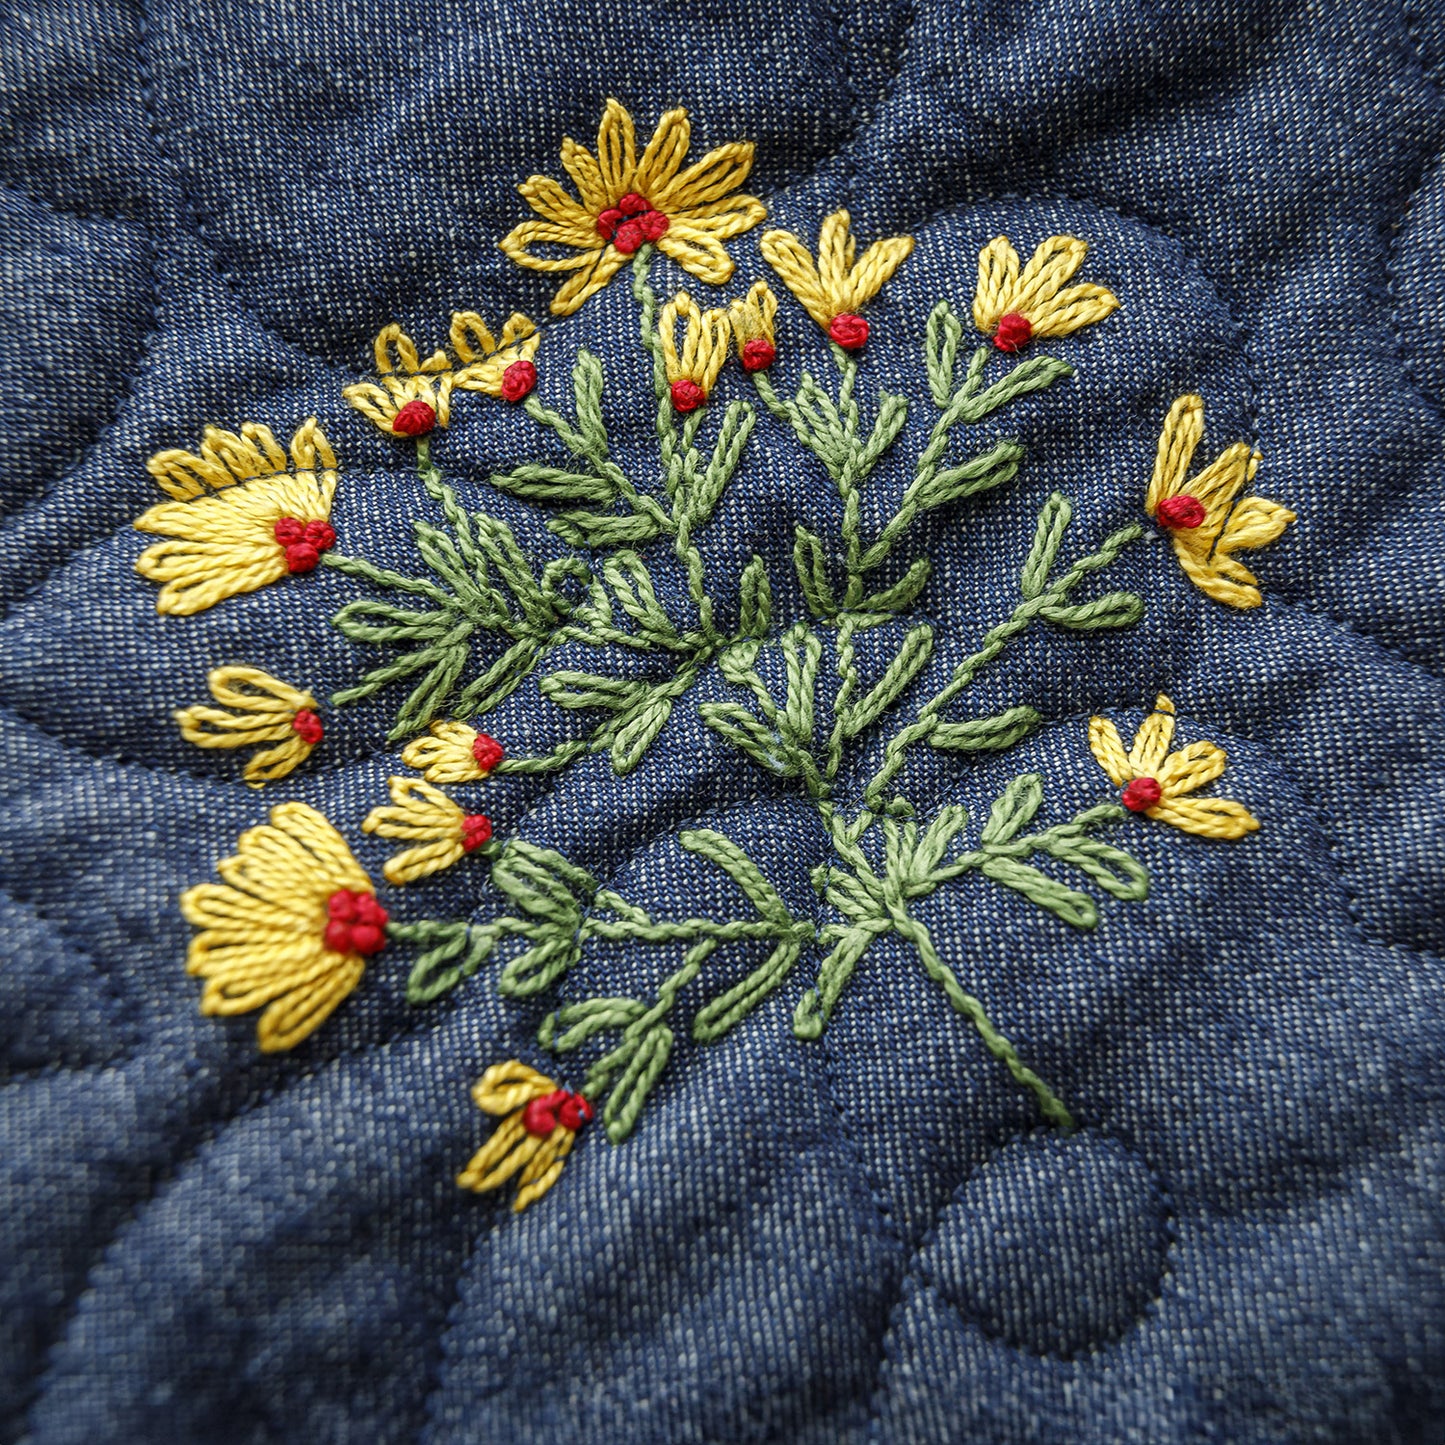 PREORDER - Ingrid's Wildflowers - An Heirloom Embroidery Kit by Missouri Star Alternative View #19